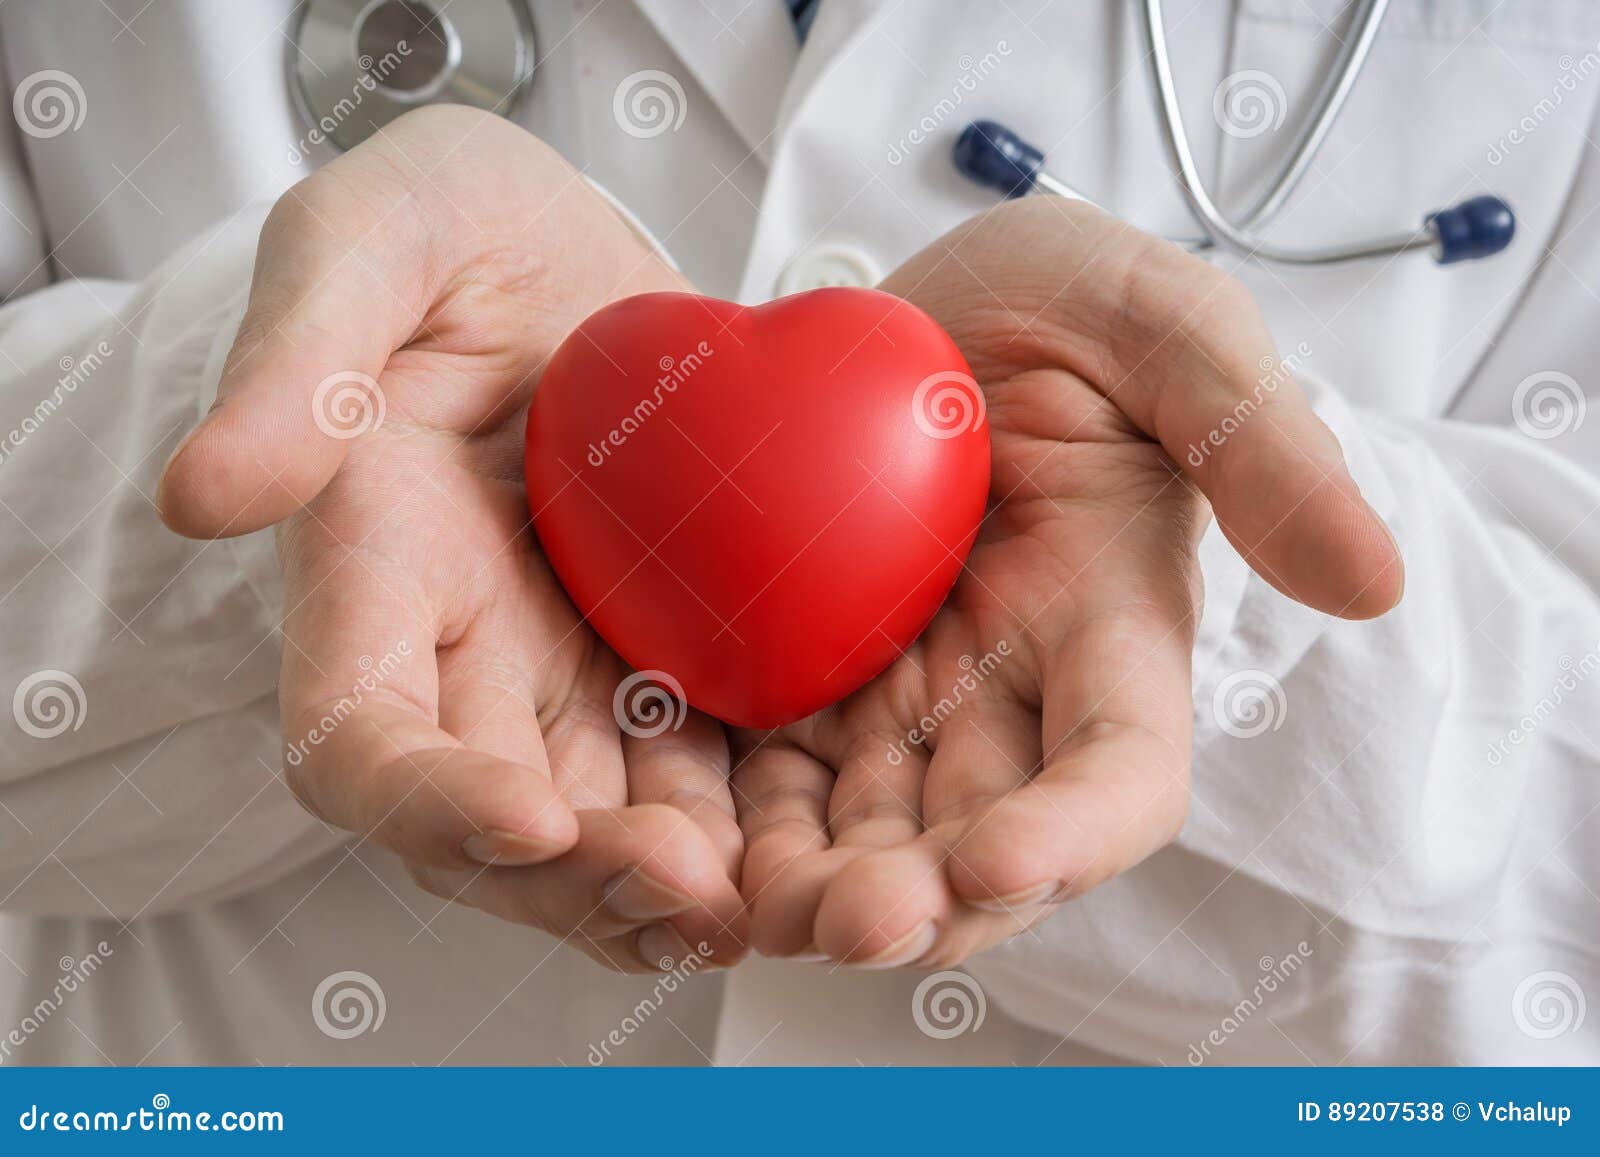 heart transplantation concept. doctor holds red heart model in hands